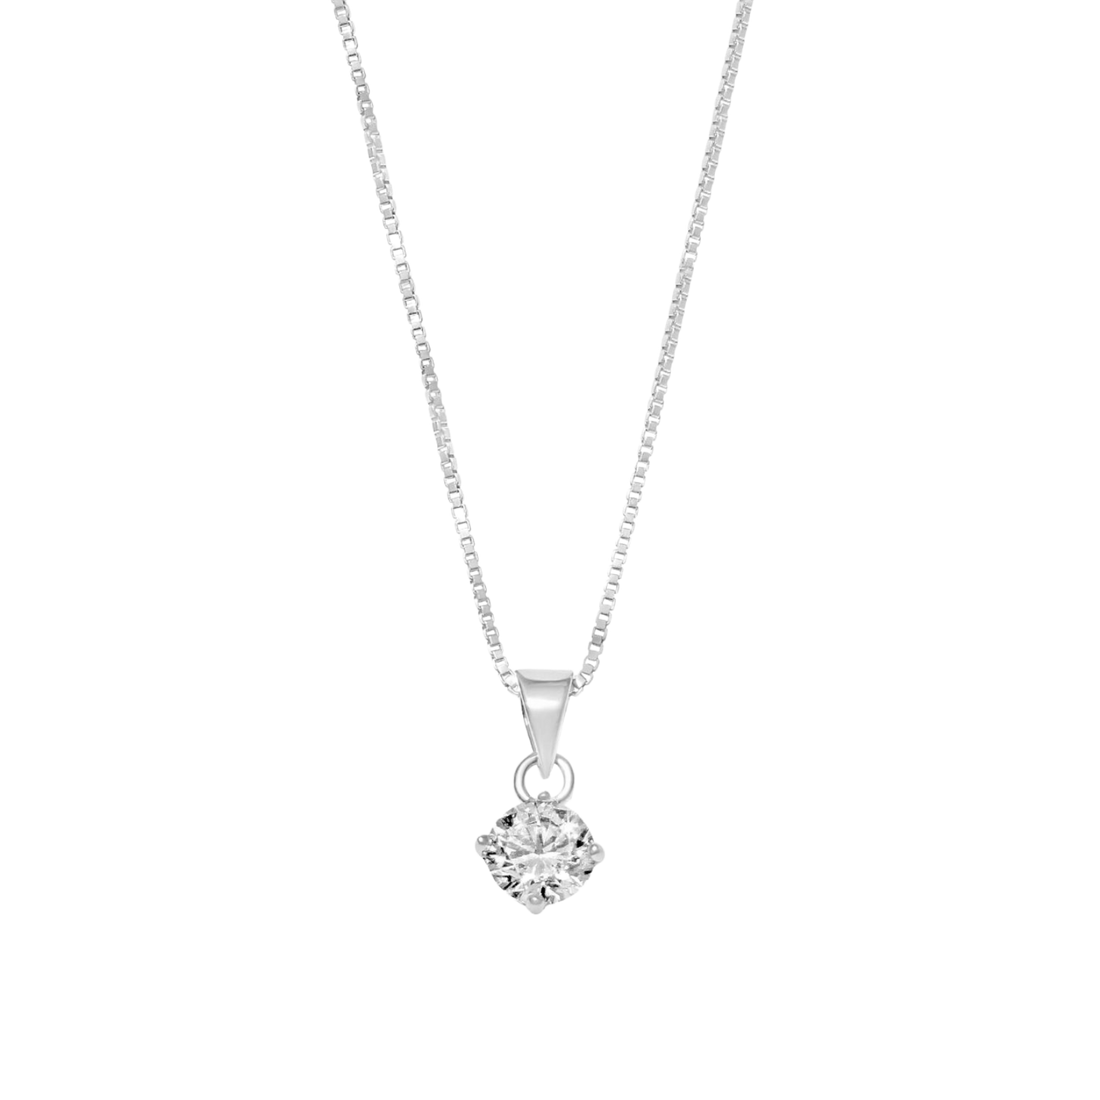 silver pendant necklace toronto, cz silver necklace toronto, cubic silver pendant canada, silver necklace canada, silver crystal necklace canada